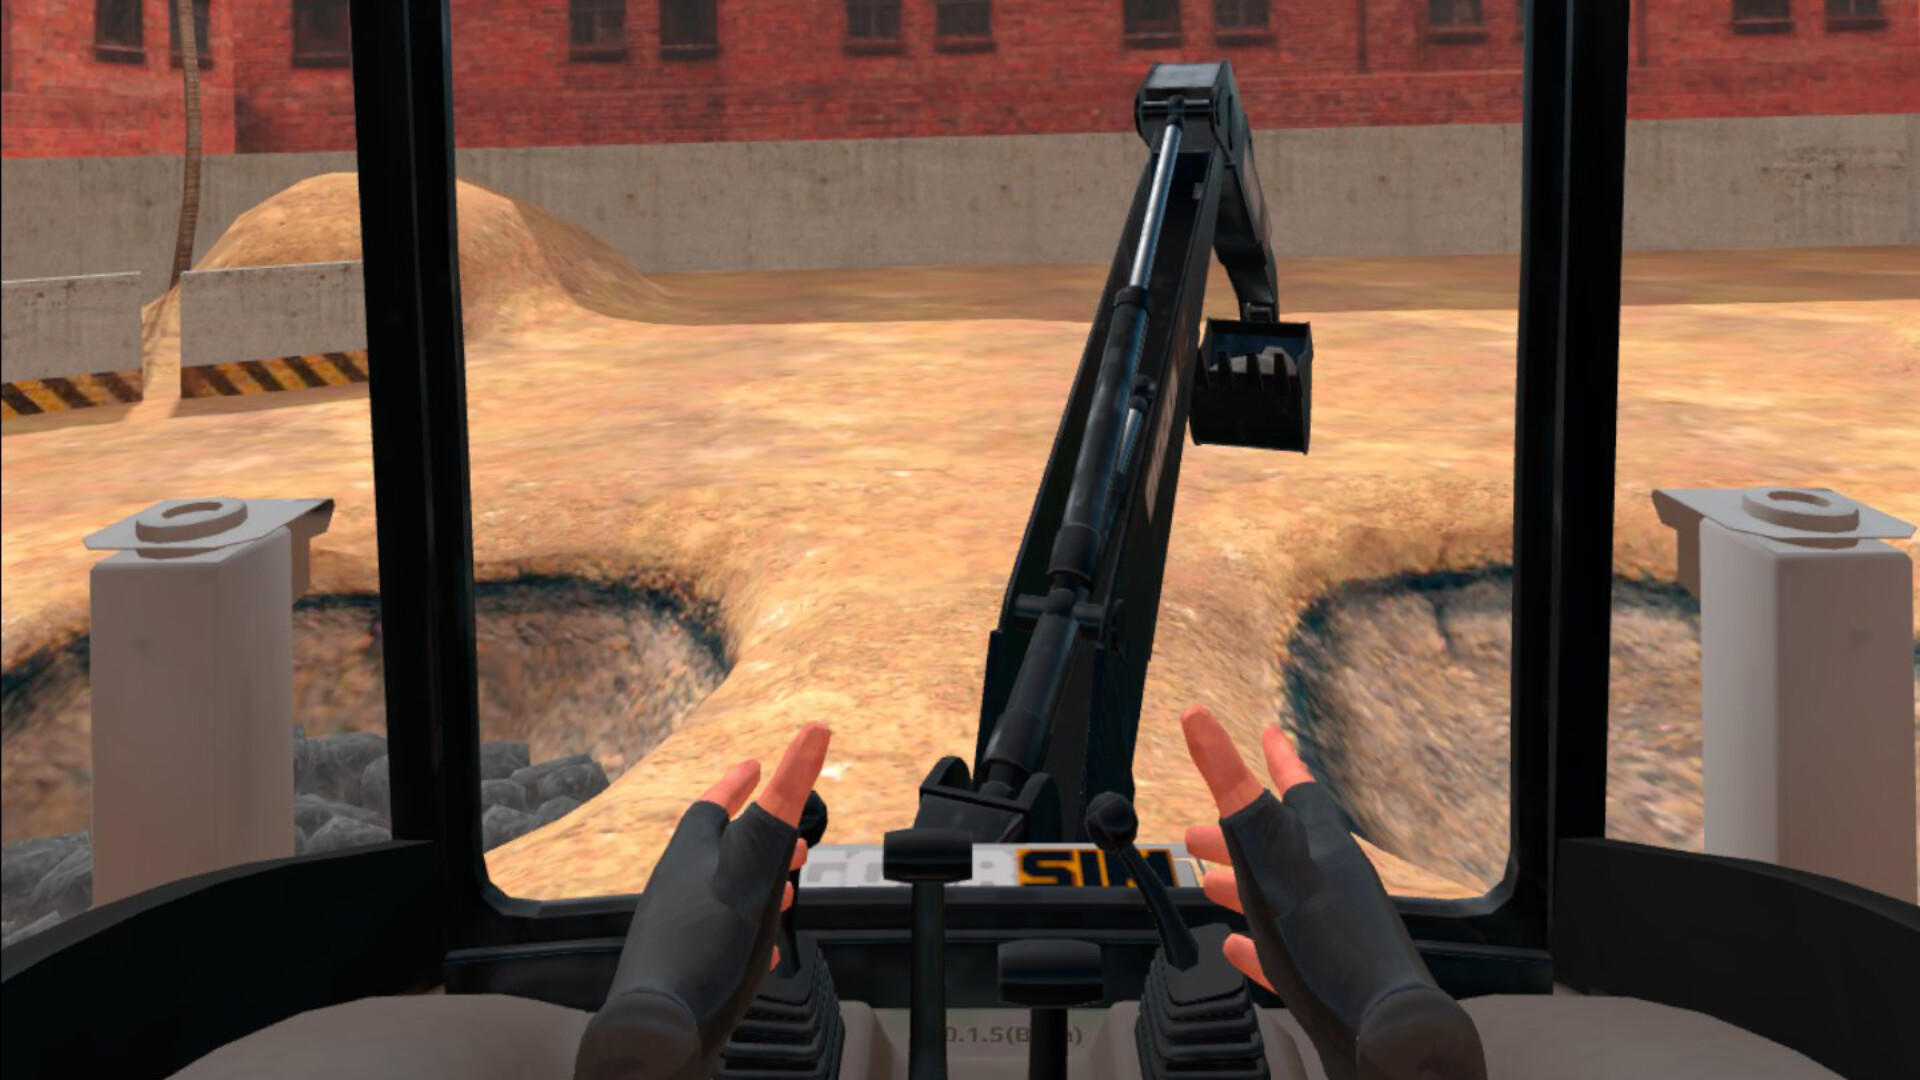 Screenshot of DiggerSim - Excavator & Heavy Equipment Simulator VR